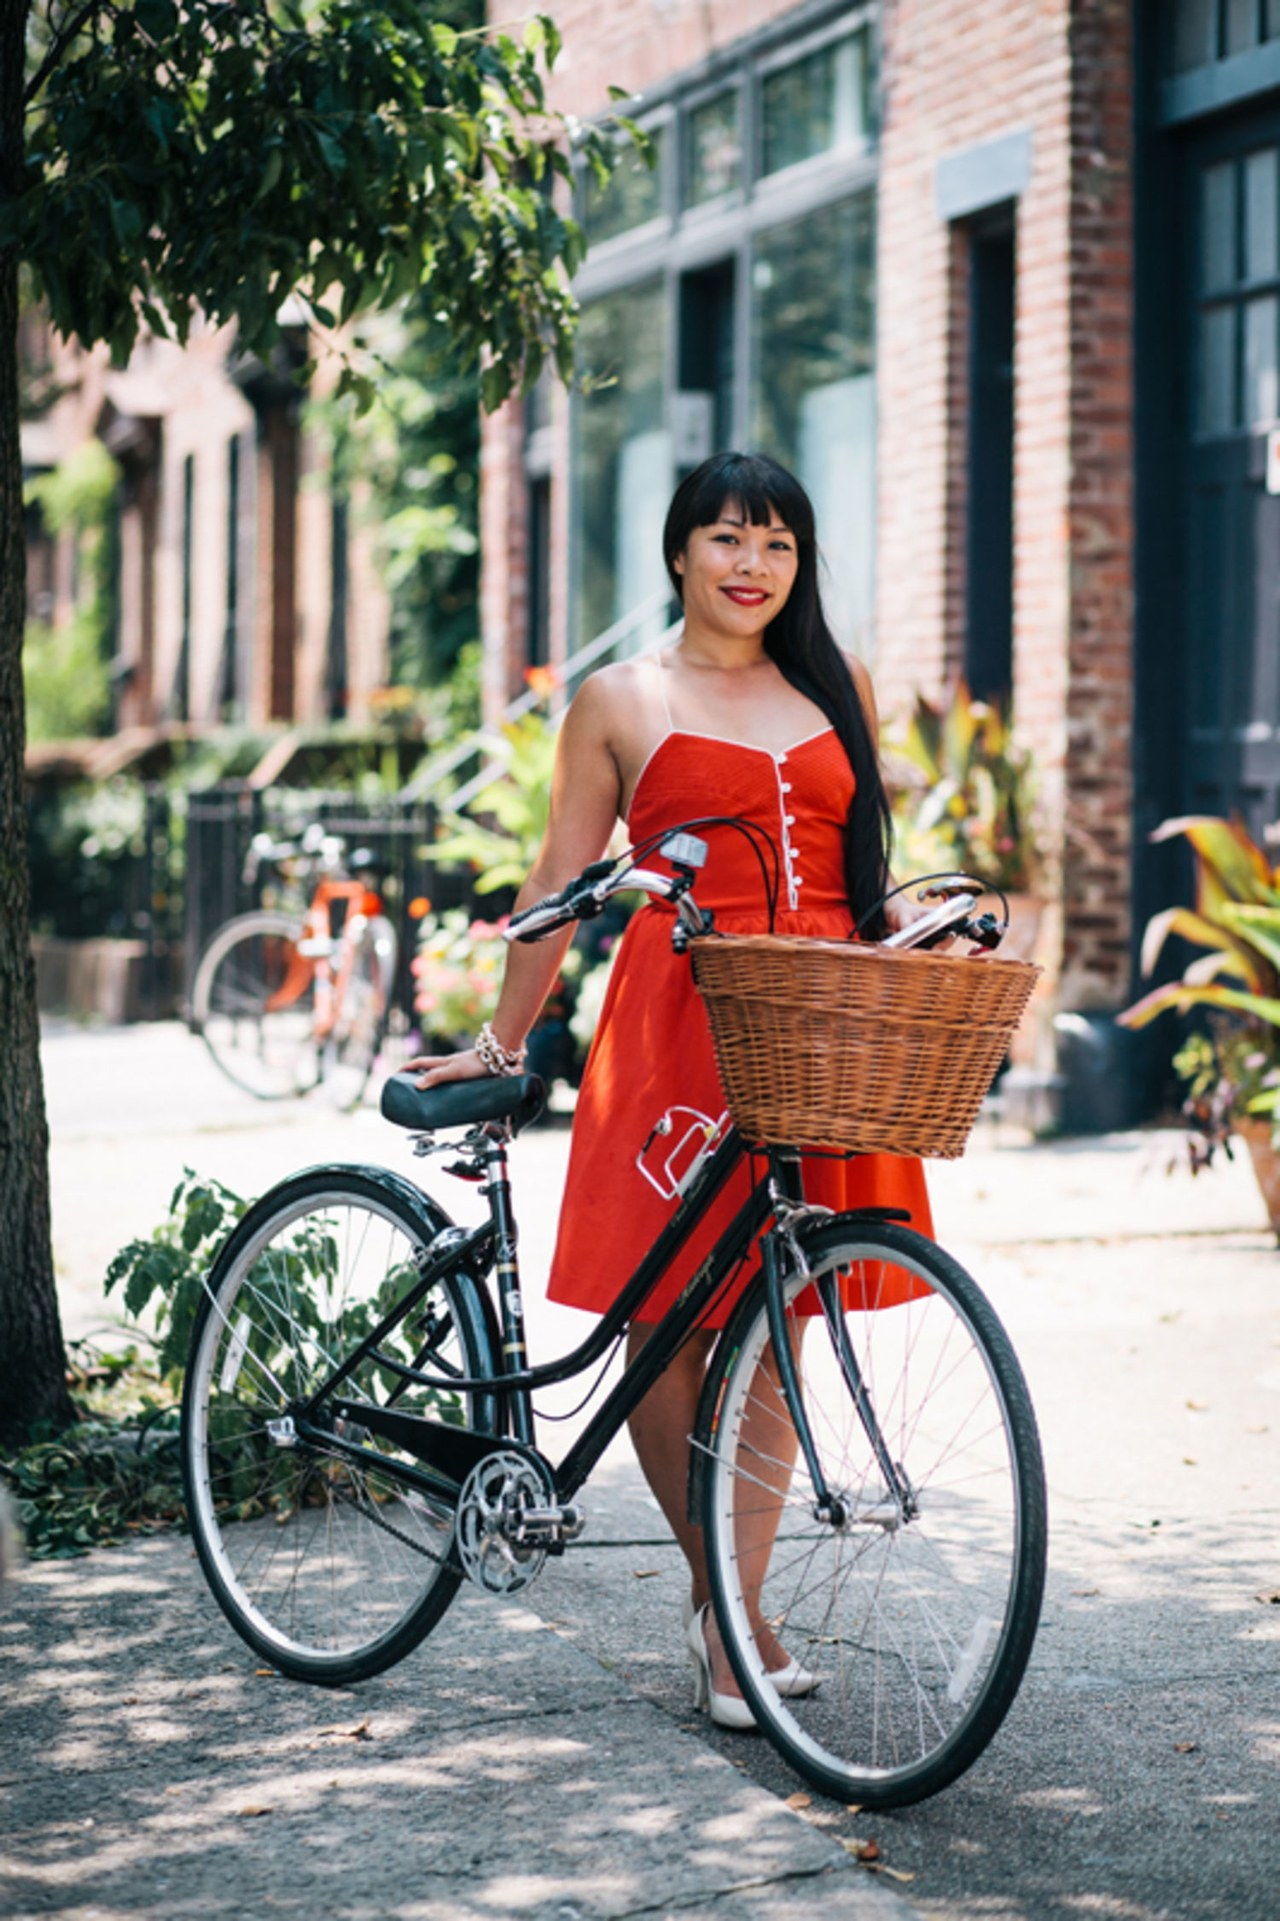 privilegiado mode girl on bike red dress